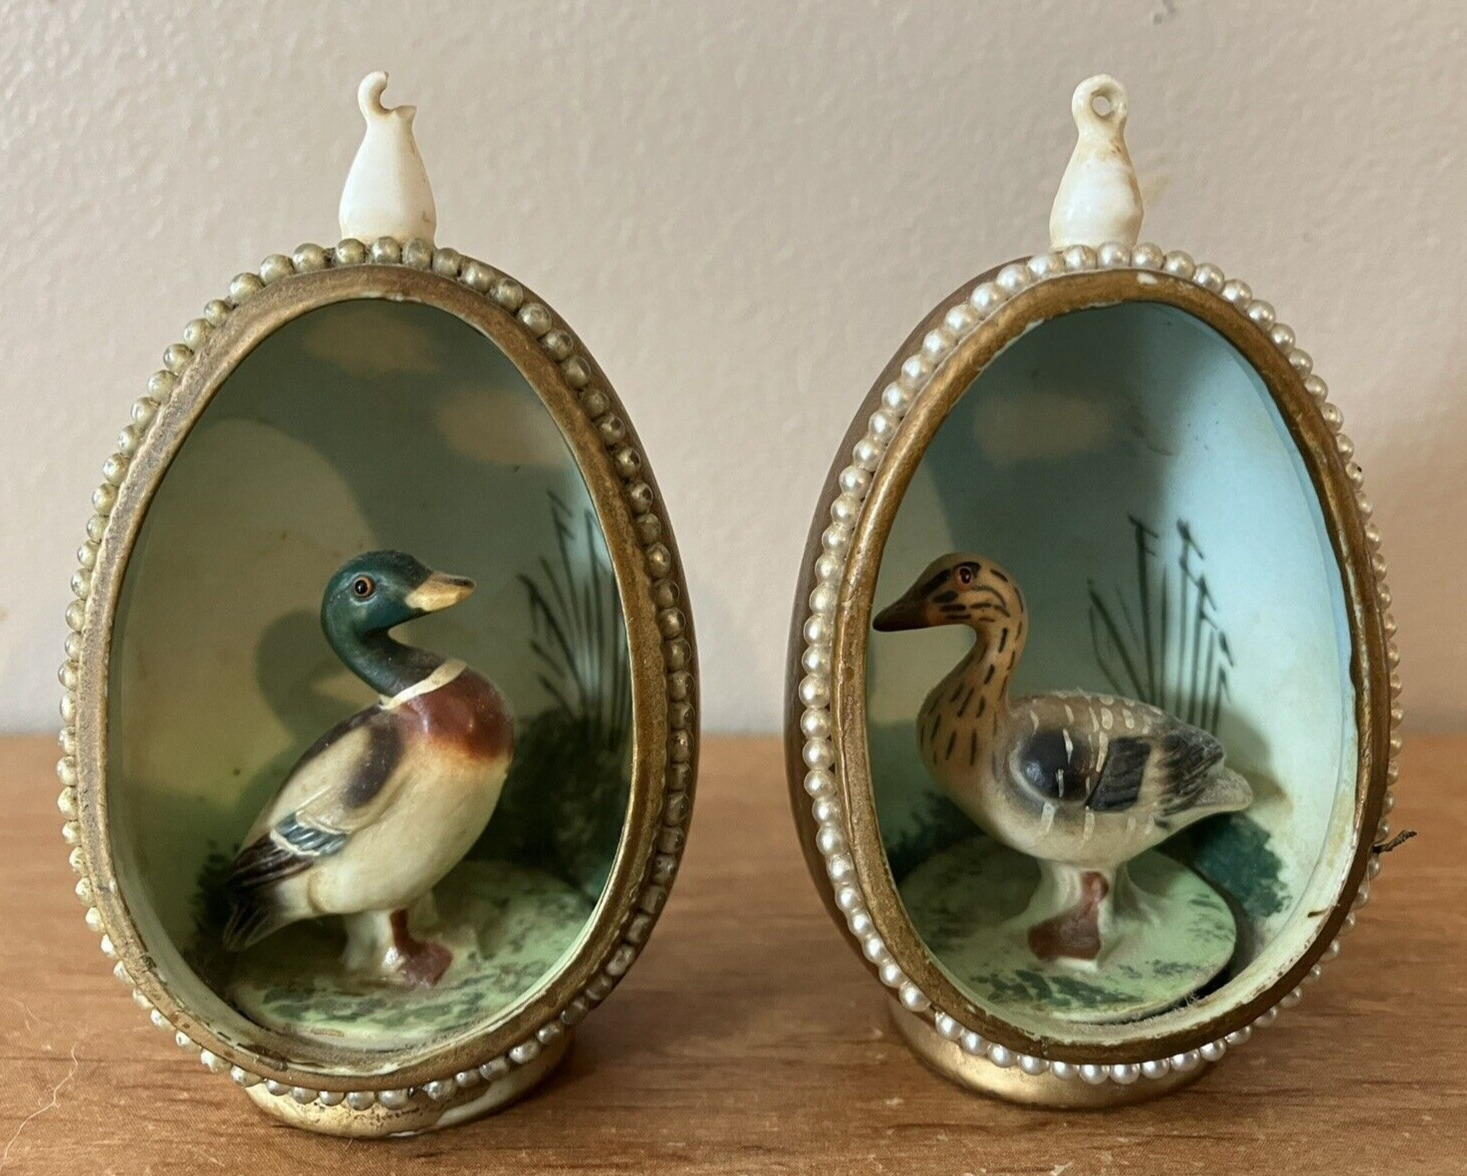 Lot of 2 - Vintage Duck In Egg Shaped Diorama - Genuine Bone China Japan